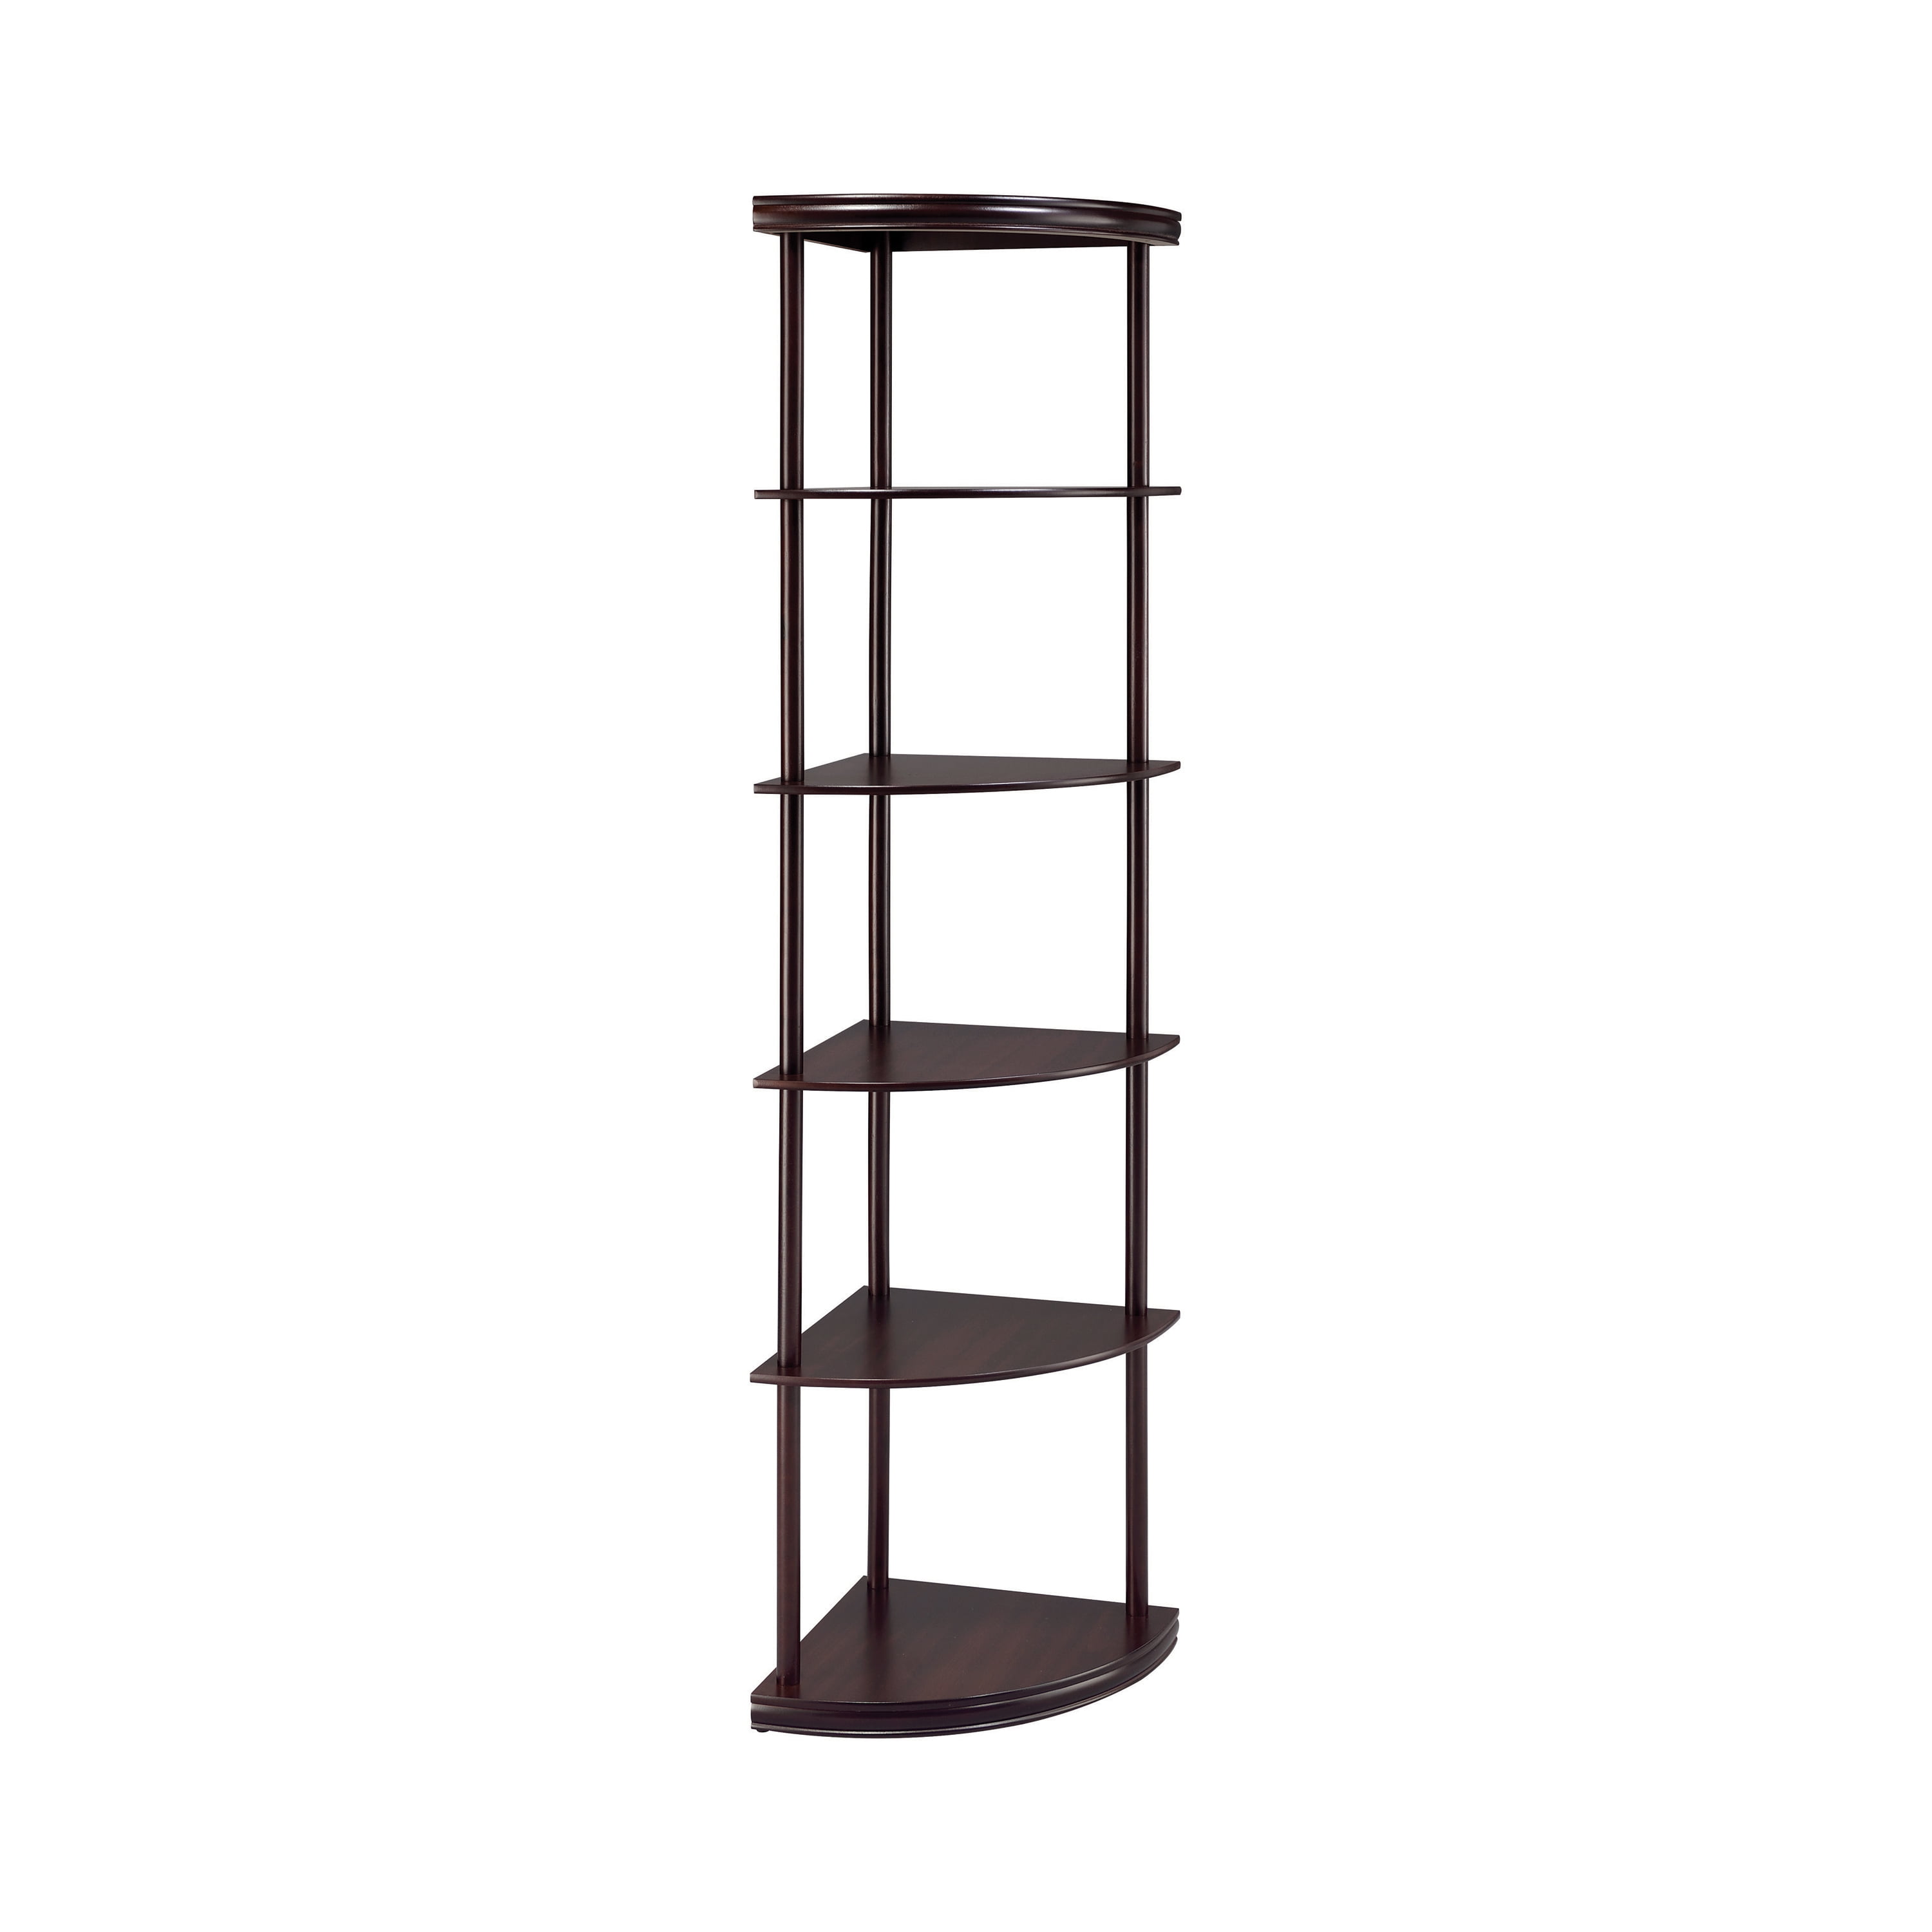 5 Tier Corner Shelf Display Stand Bookshelf Ladder White Espresso Black Cherry 